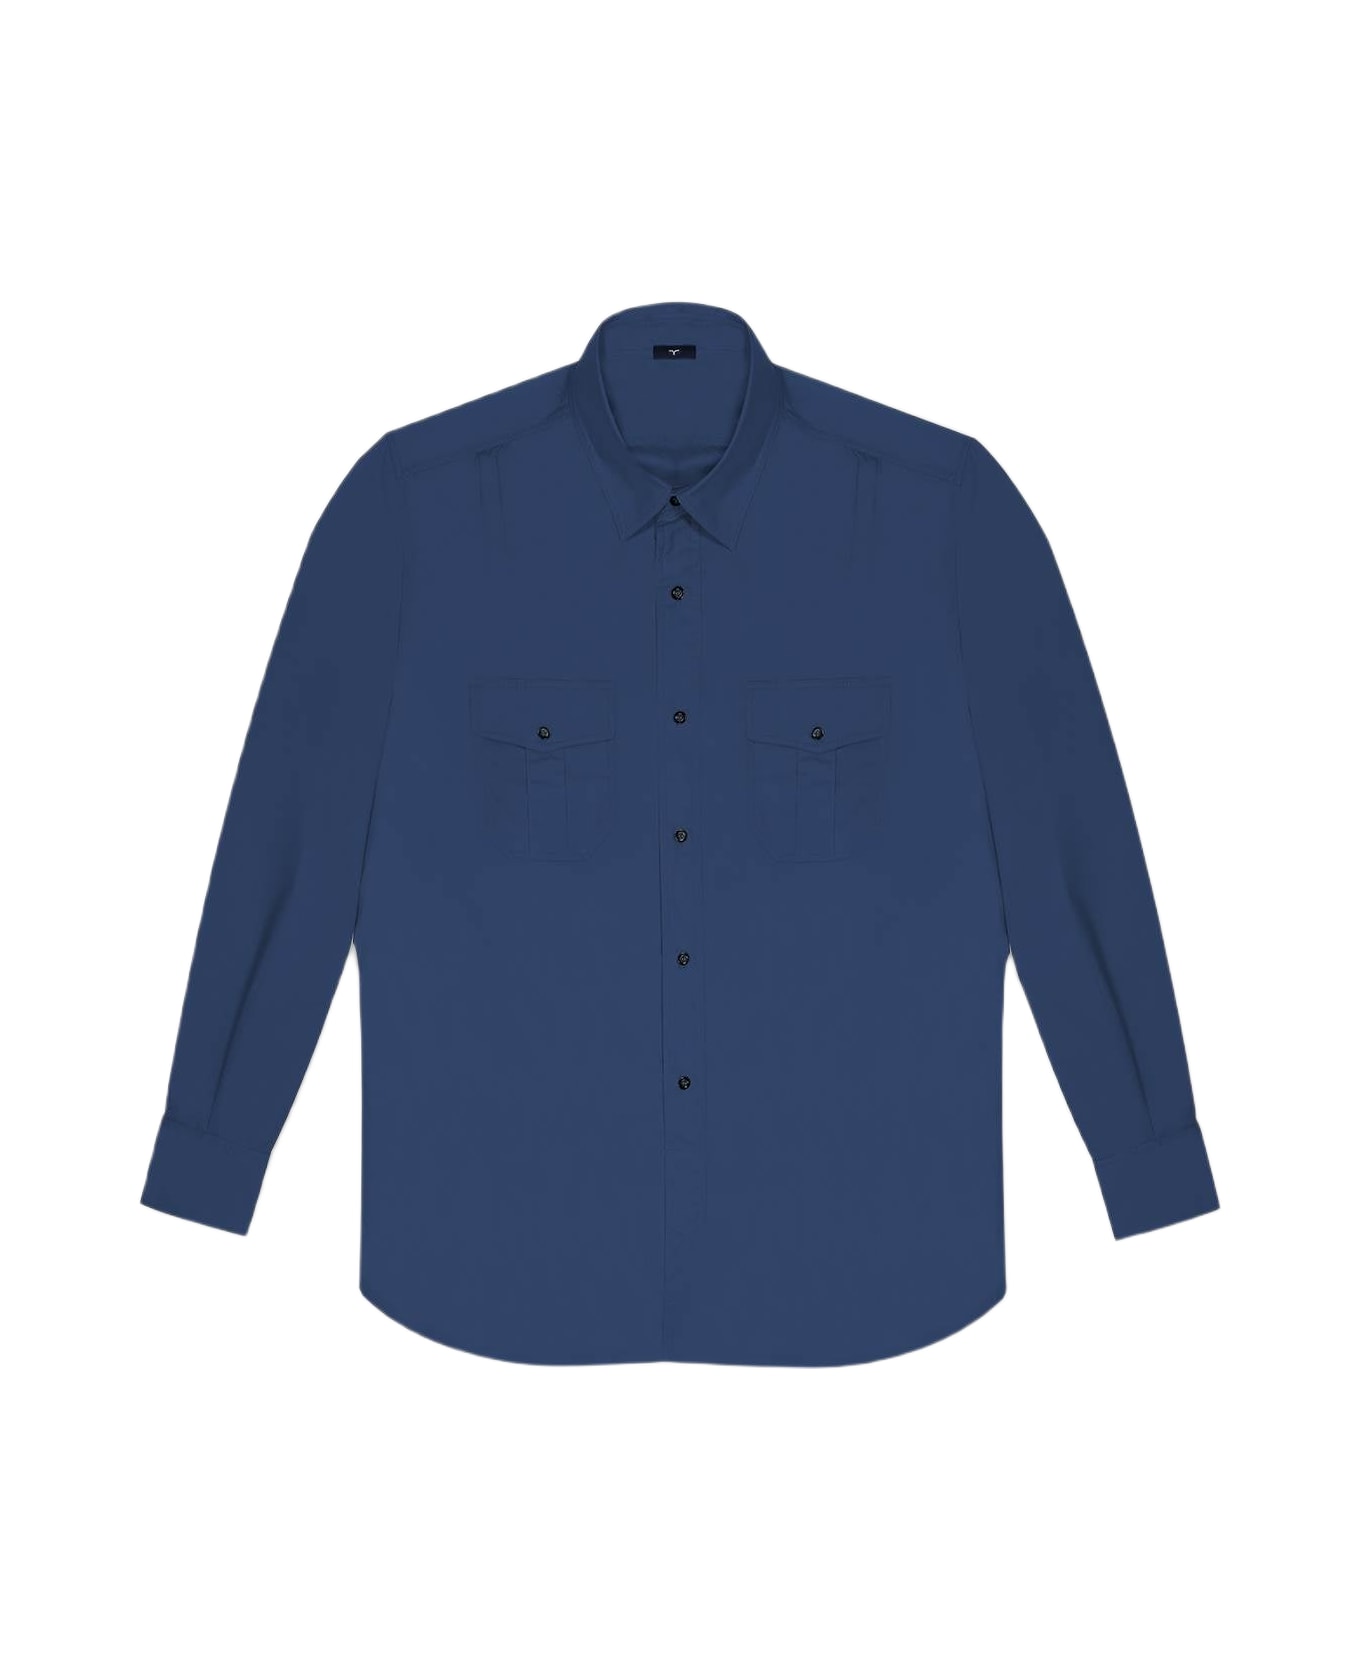 Larusmiani Military Cotton Shirt Shirt - Blue